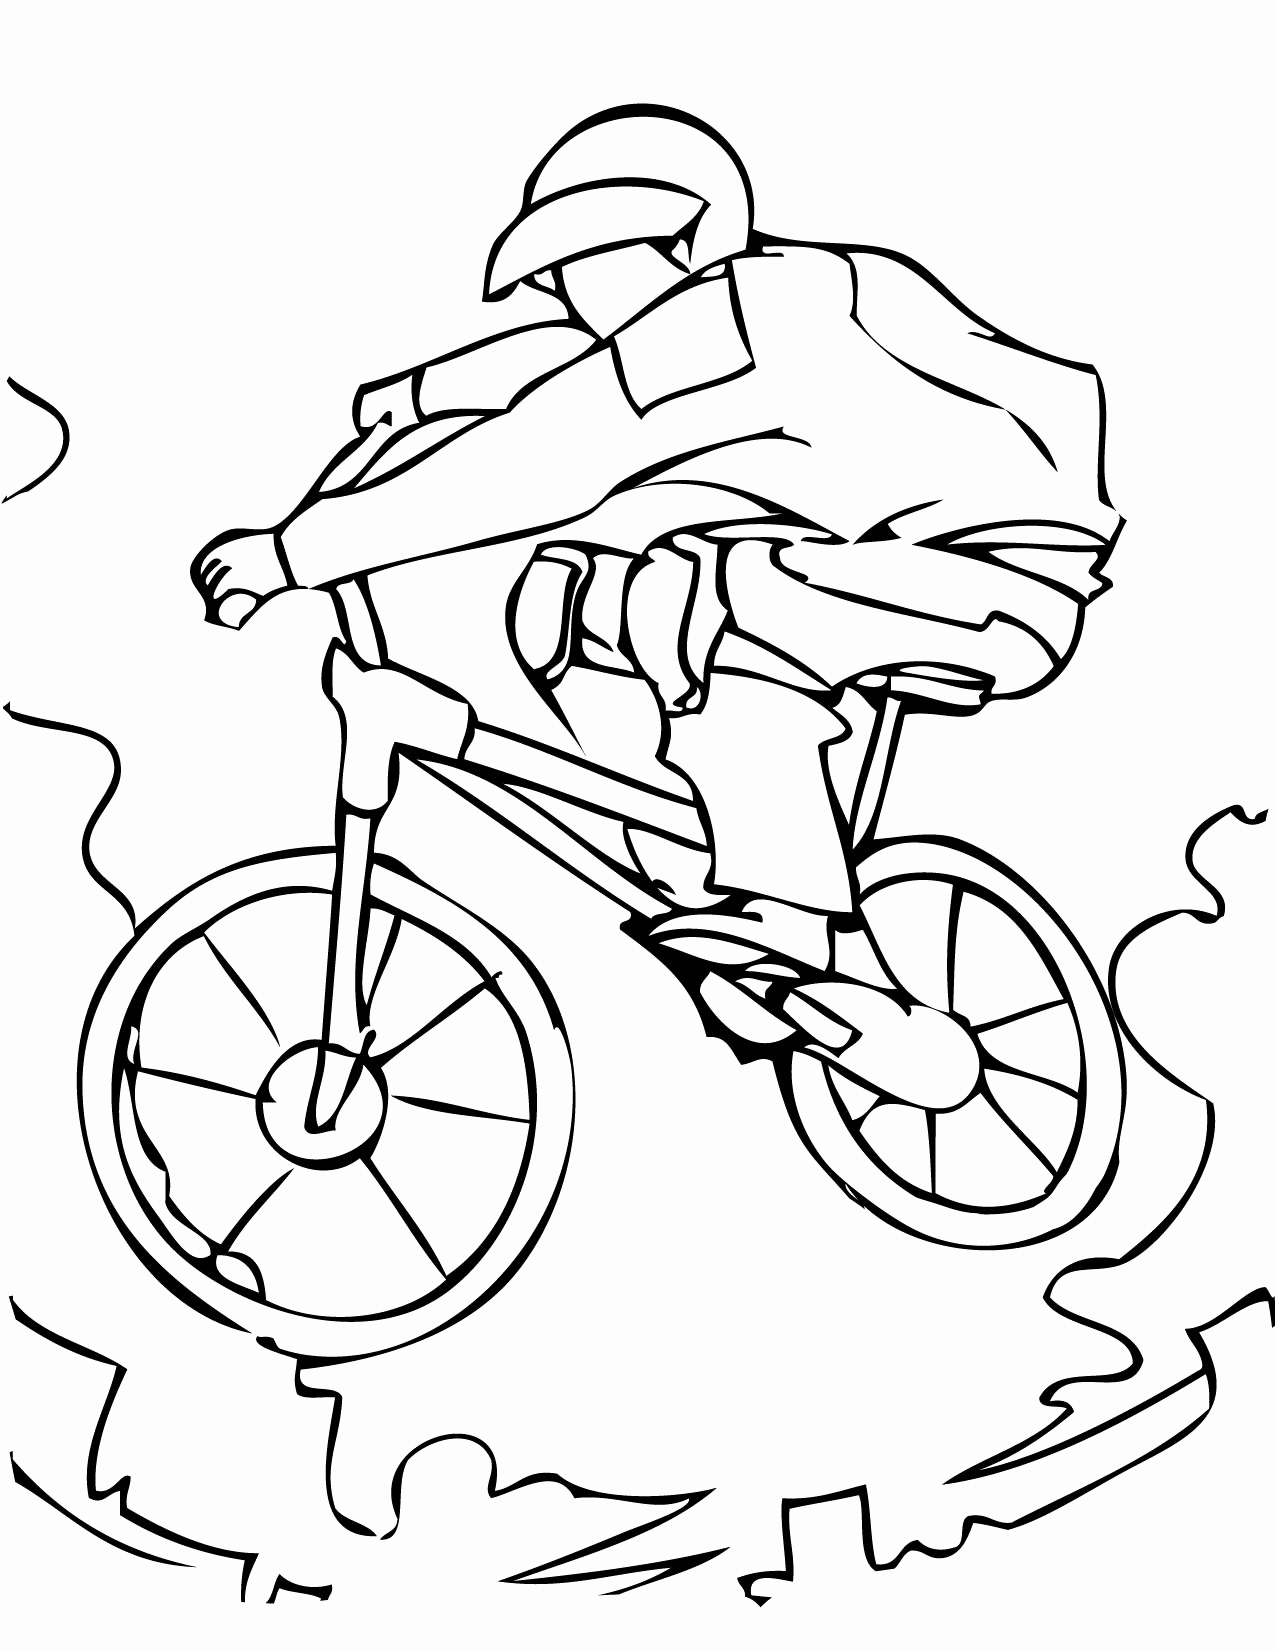 Bmx Bike Coloring Page at GetColorings.com | Free printable colorings